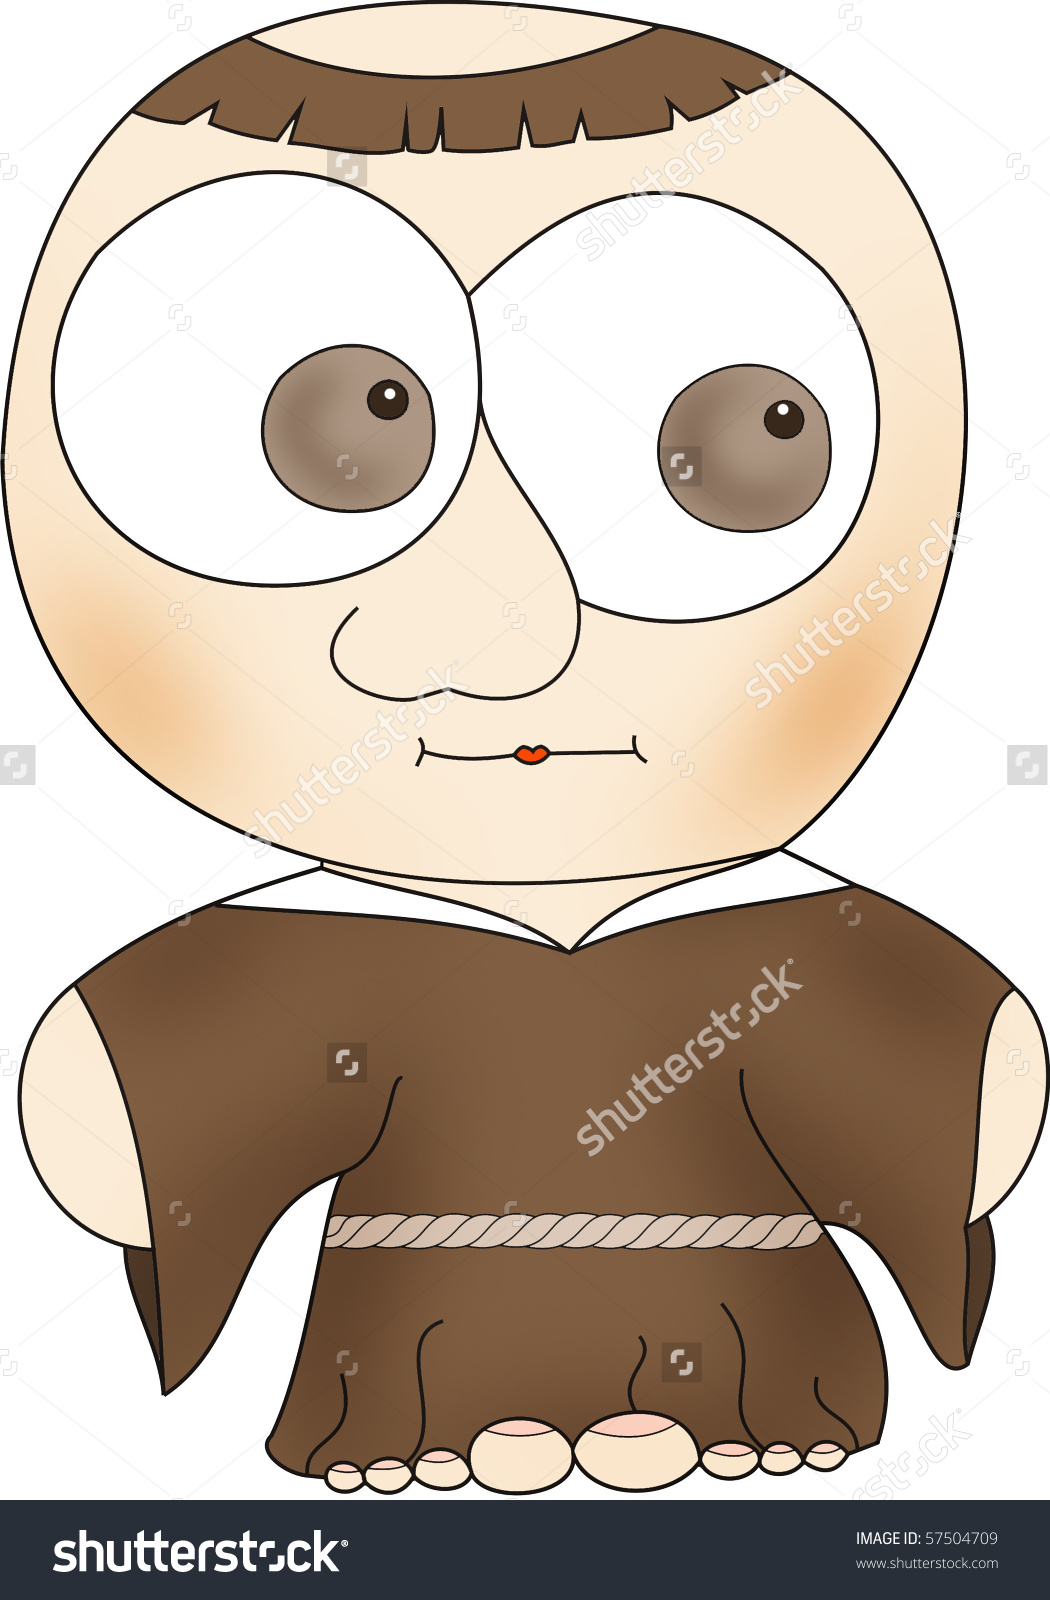 Cartoon Monk In A Brown Cowl Stock Photo 57504709 : Shutterstock.